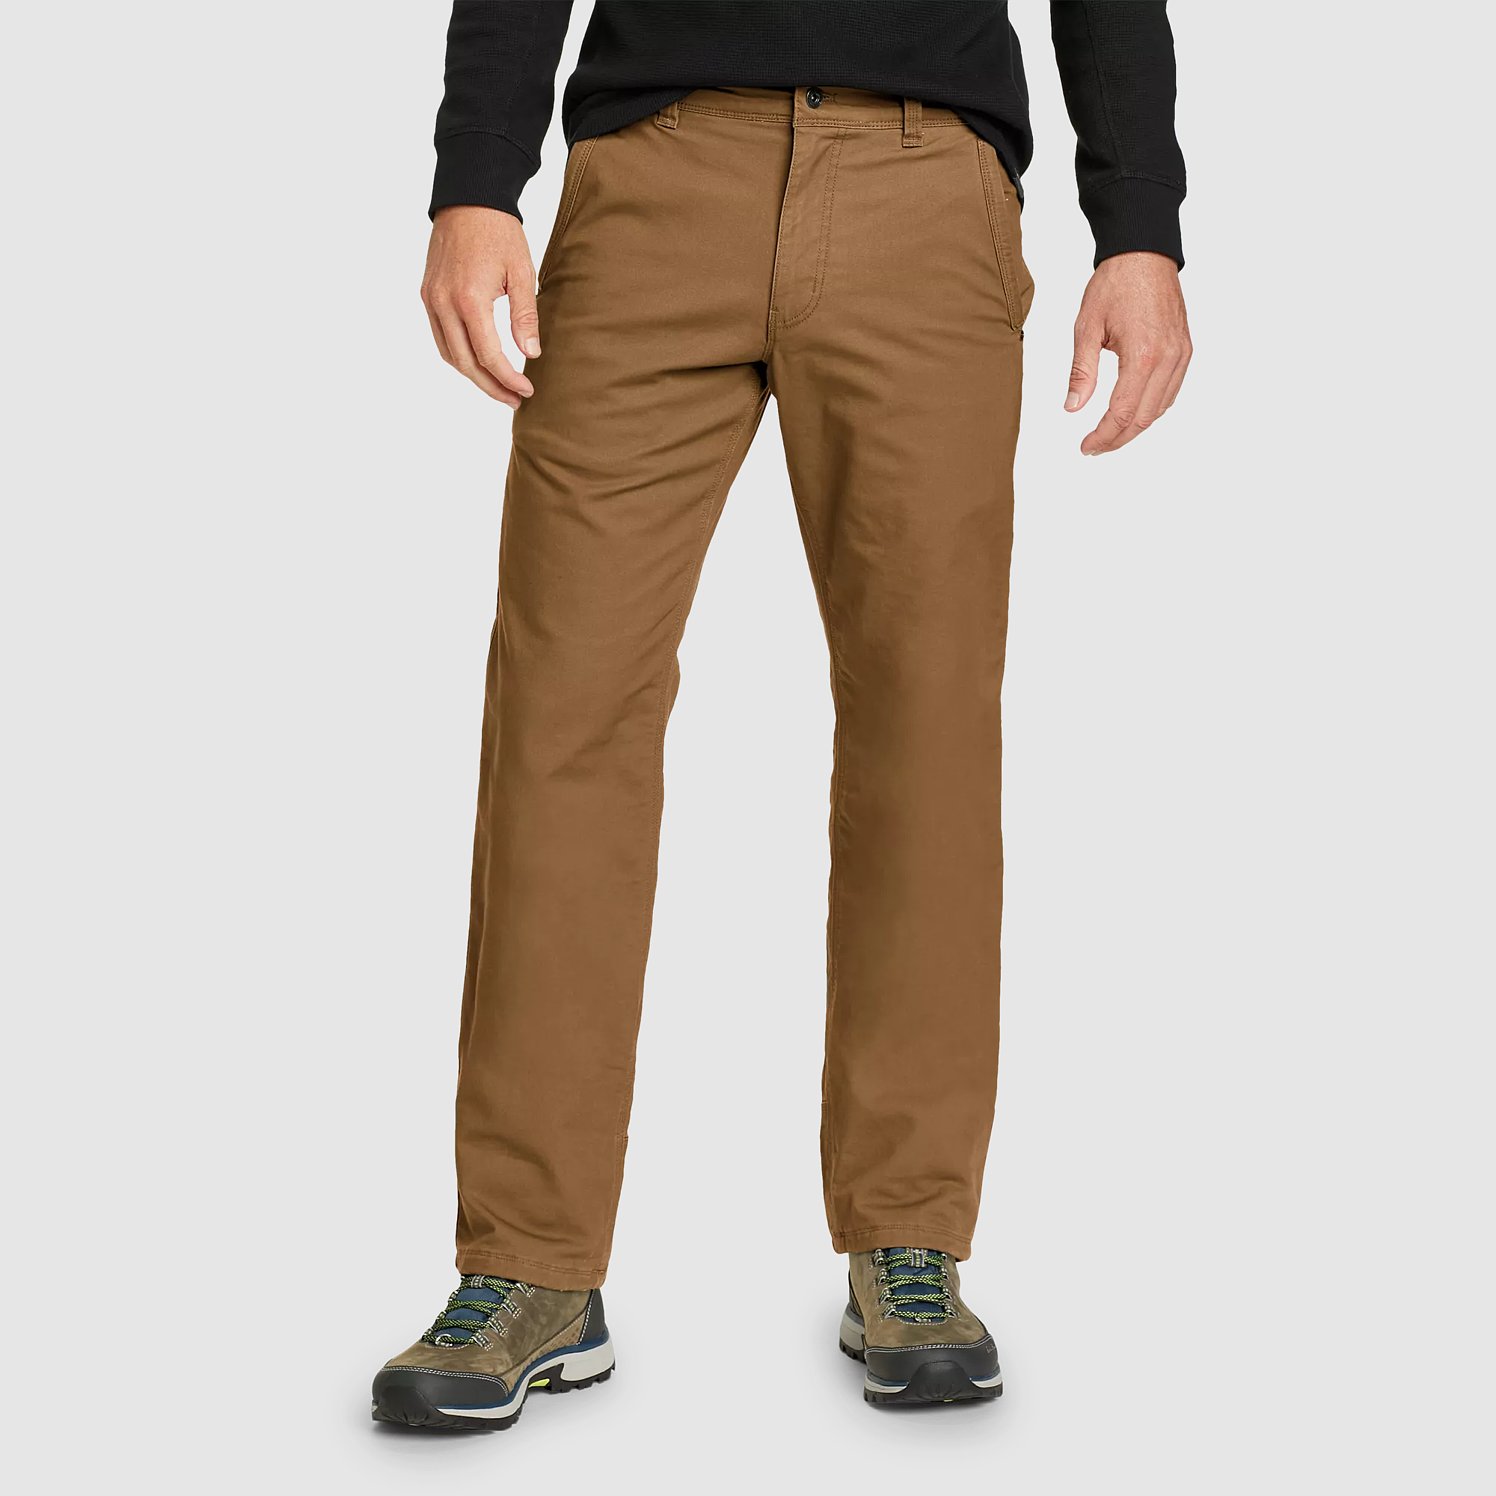 Eddie Bauer Fleece Lined Pants Green Size 8 - $51 (43% Off Retail